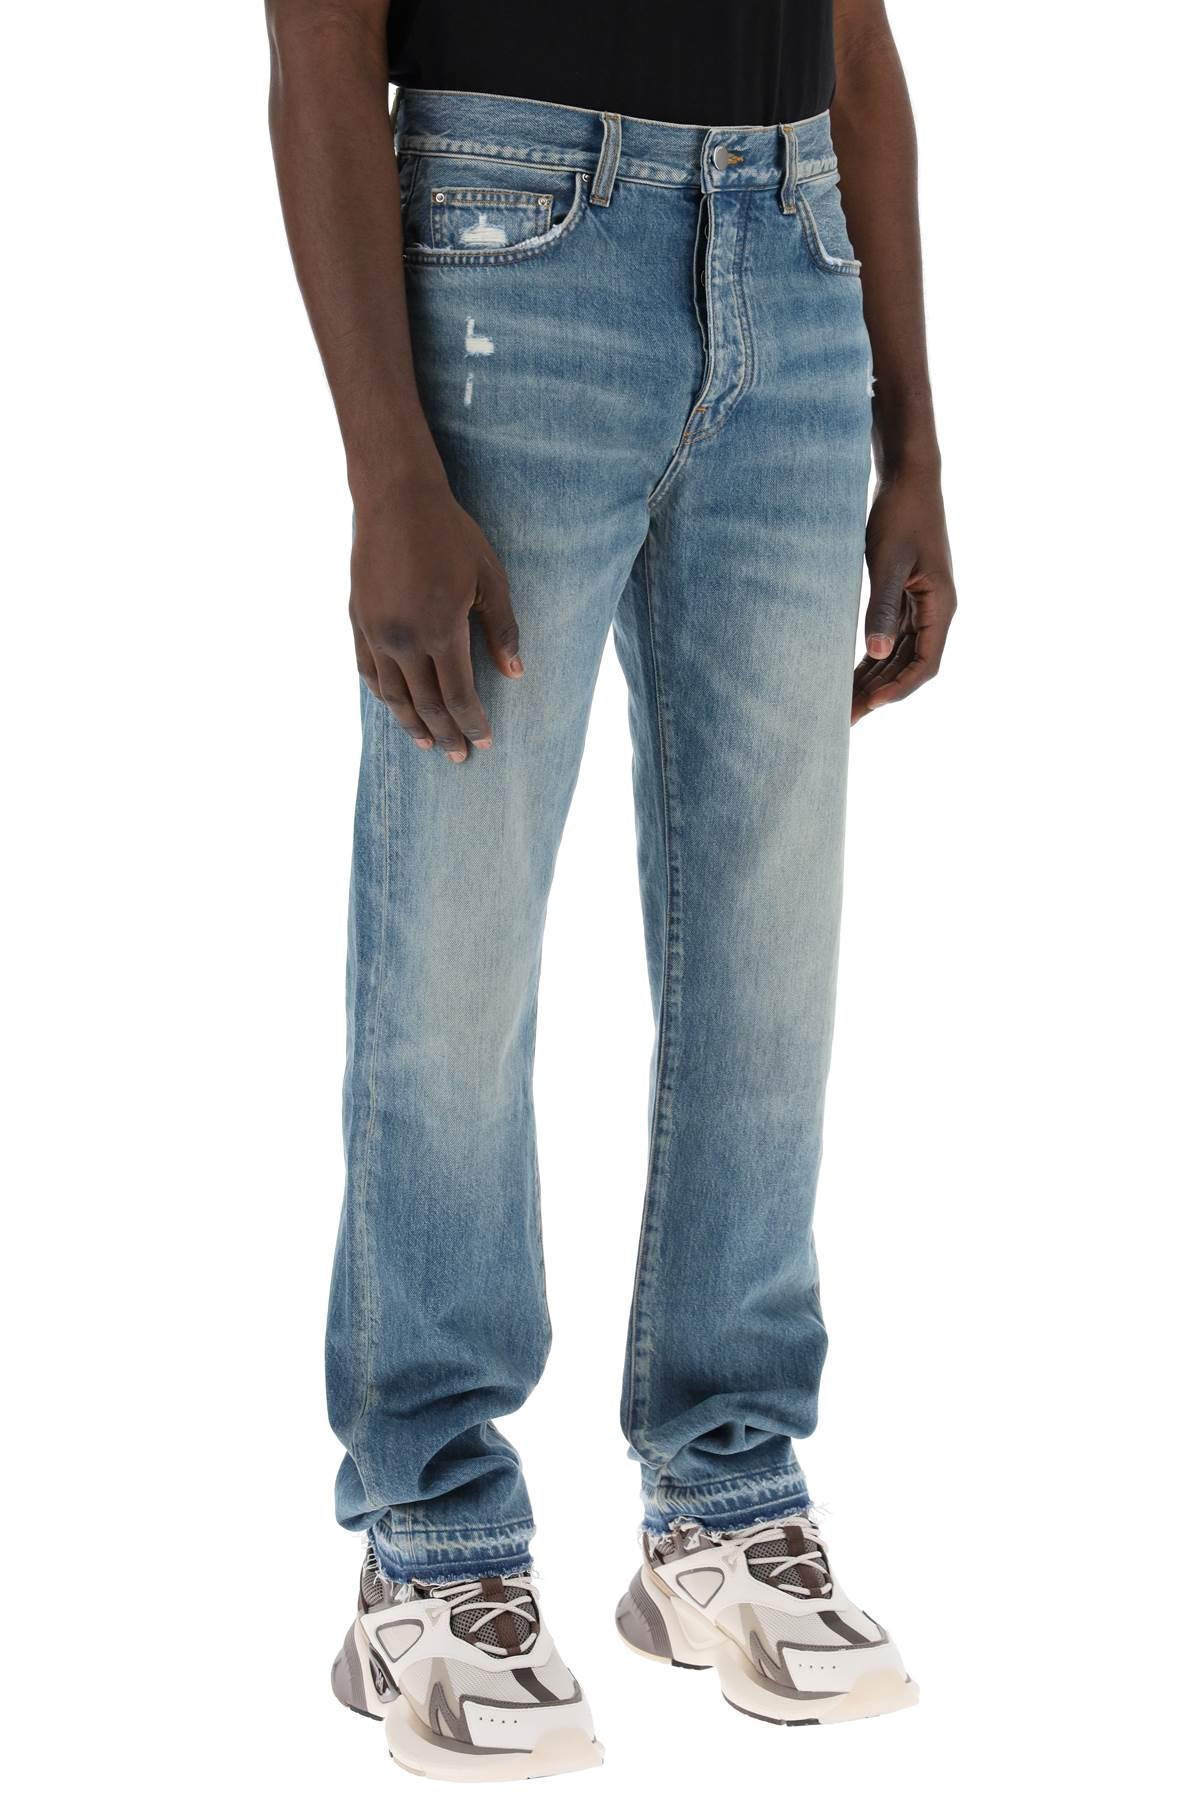 "Five-Pocket Distressed Effect Jeans"